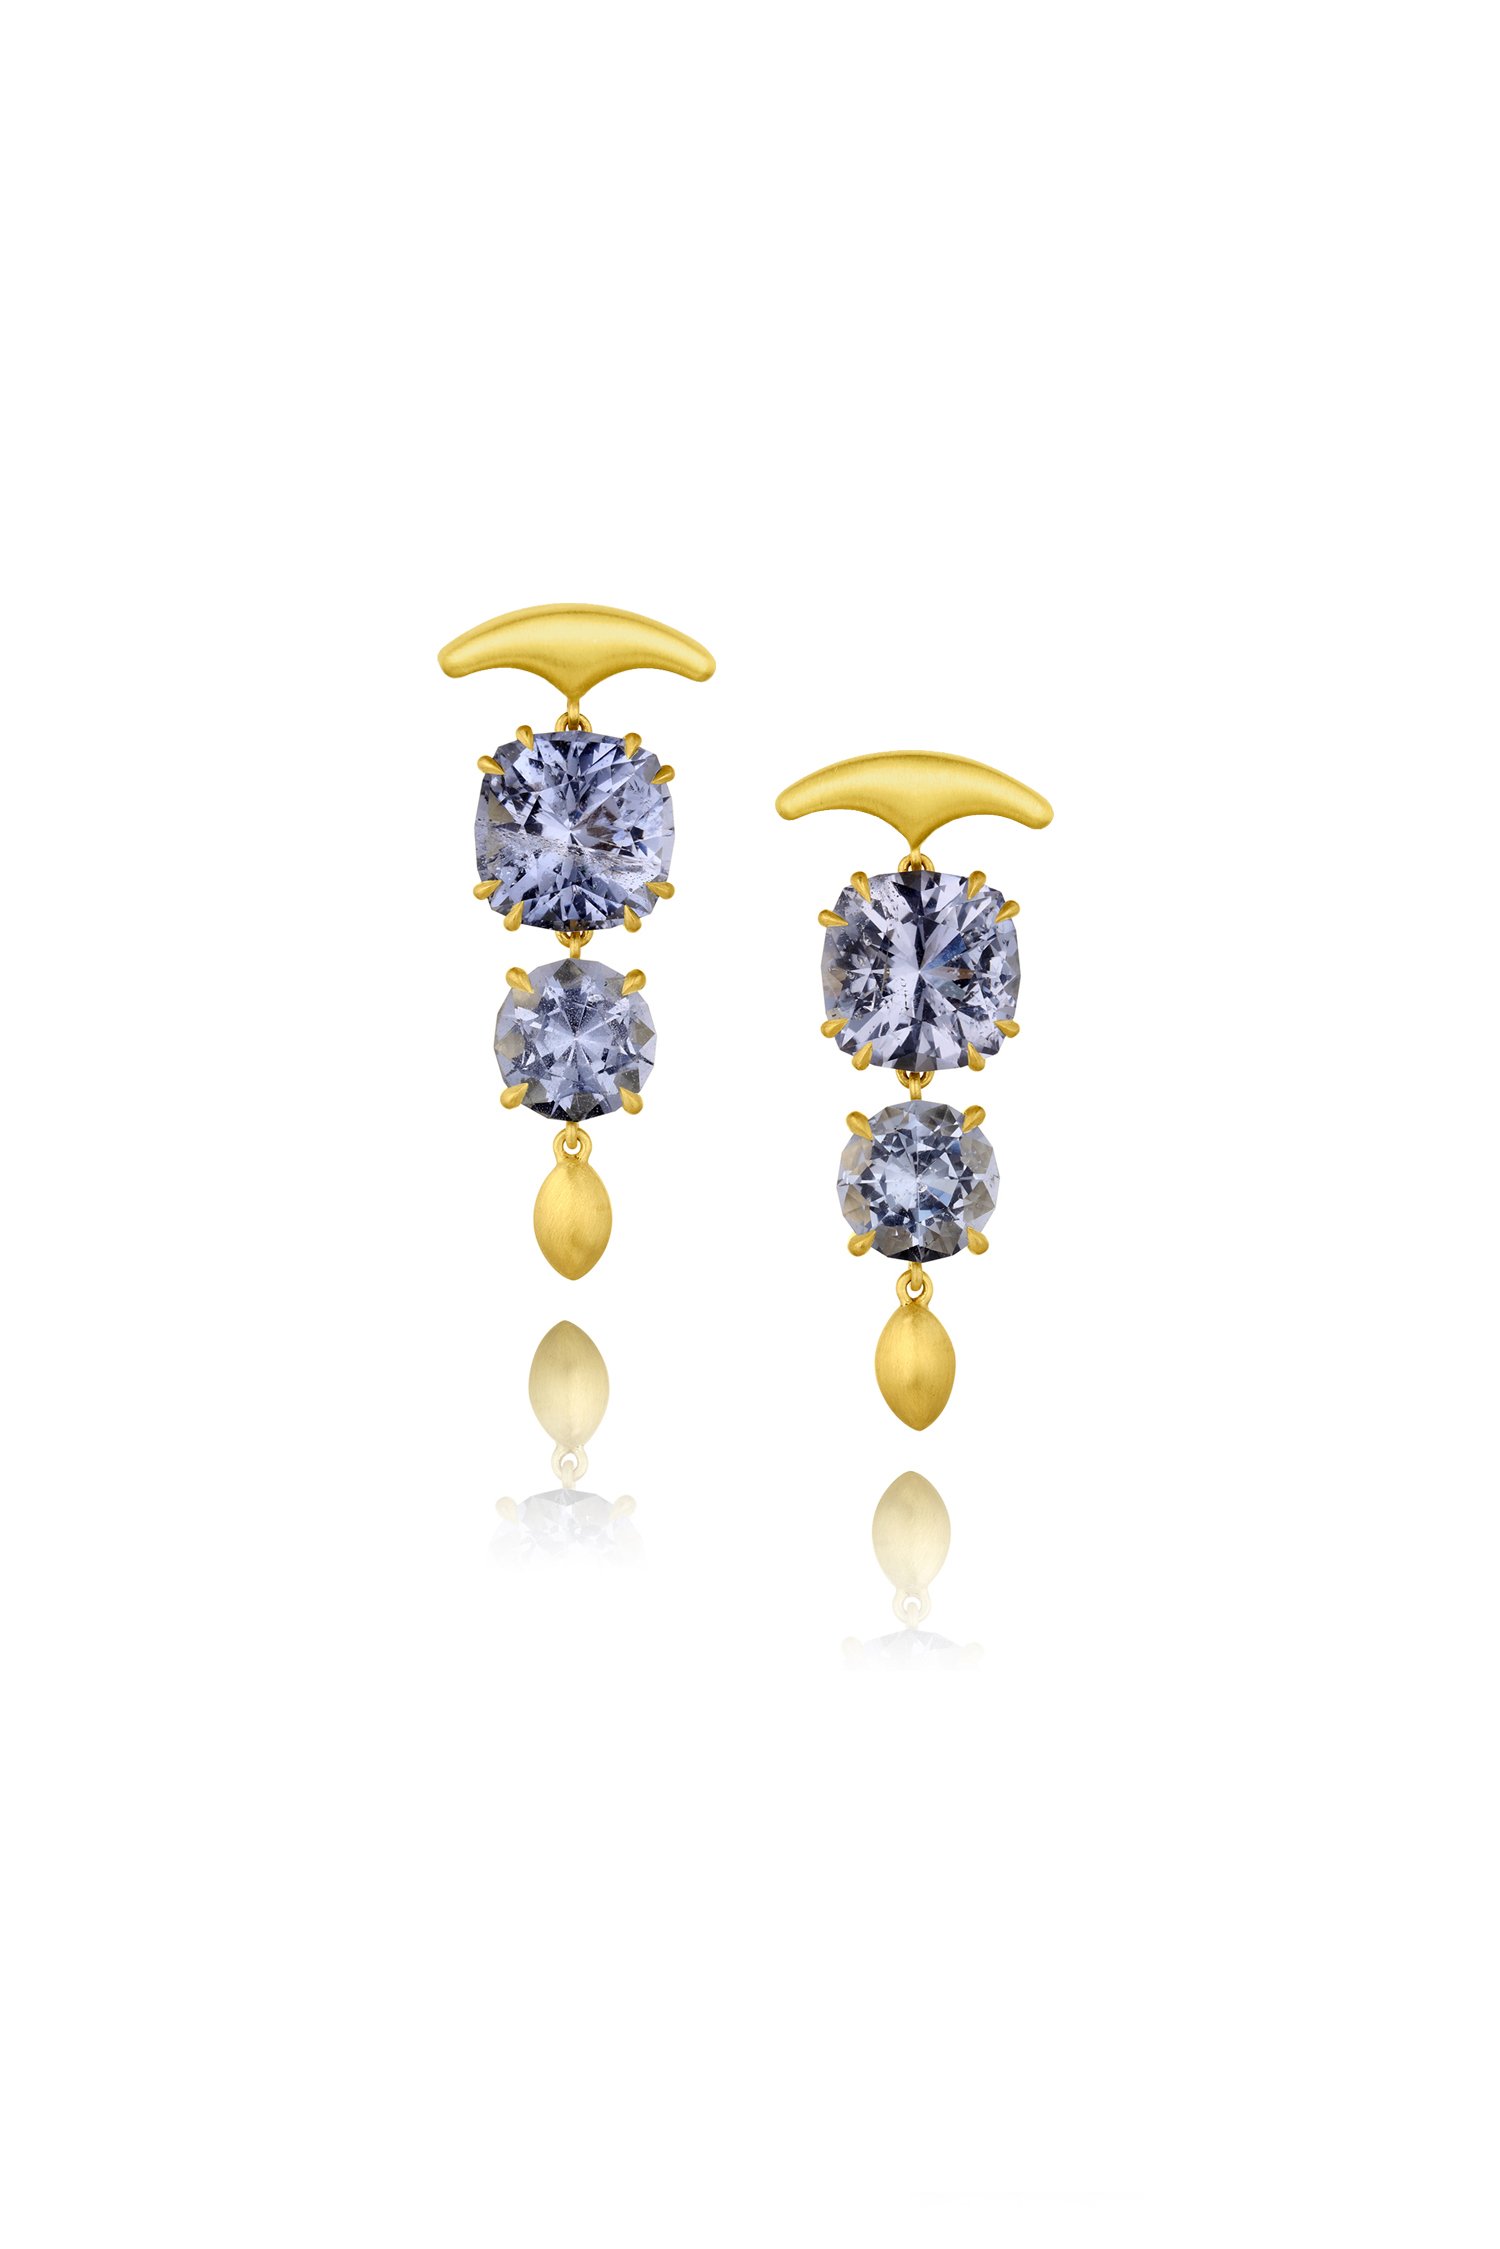 Leigh Maxwell Gemmy Wave Earrings - Blue Beryl